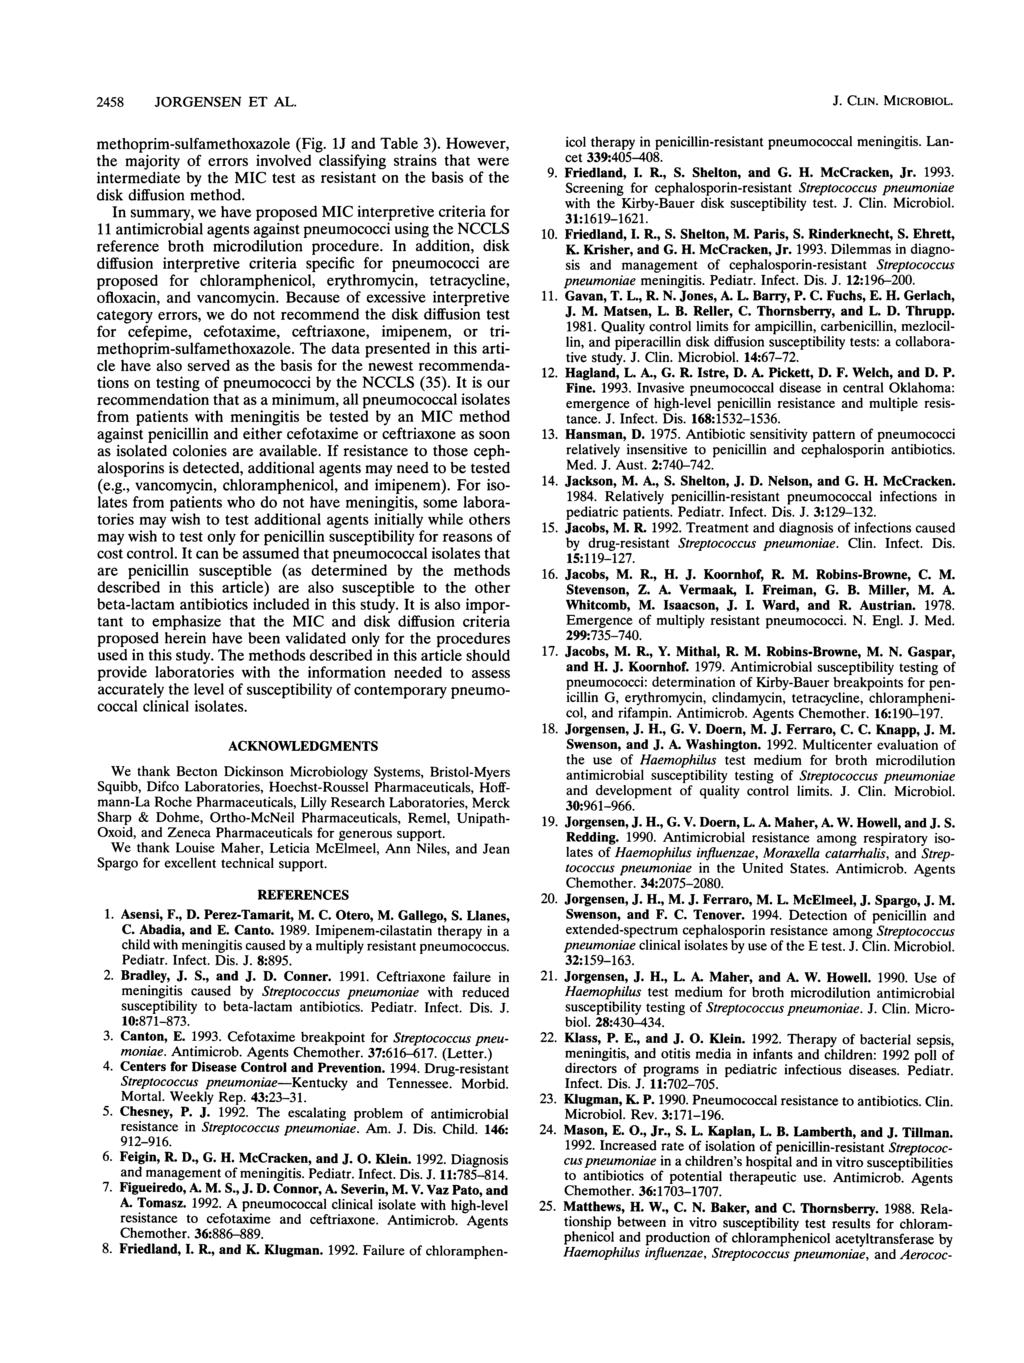 58 JORGENSEN ET AL. methoprim-sulfamethoxazole (Fig. 1J and Table 3).